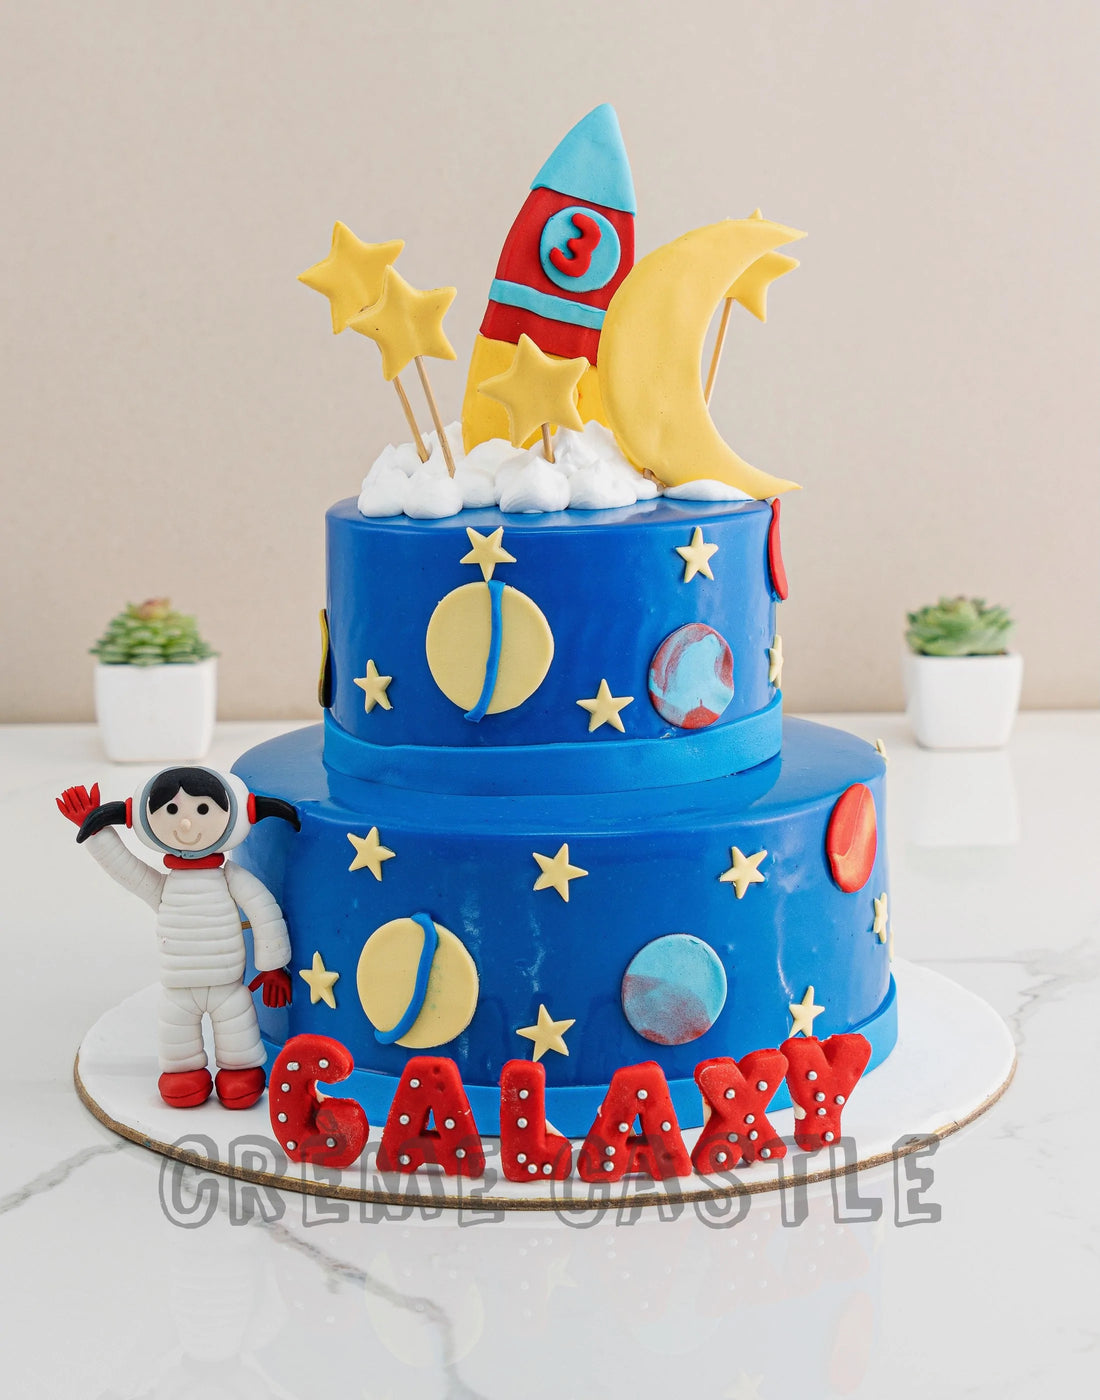 Astronaut Theme Cake by Creme Castle